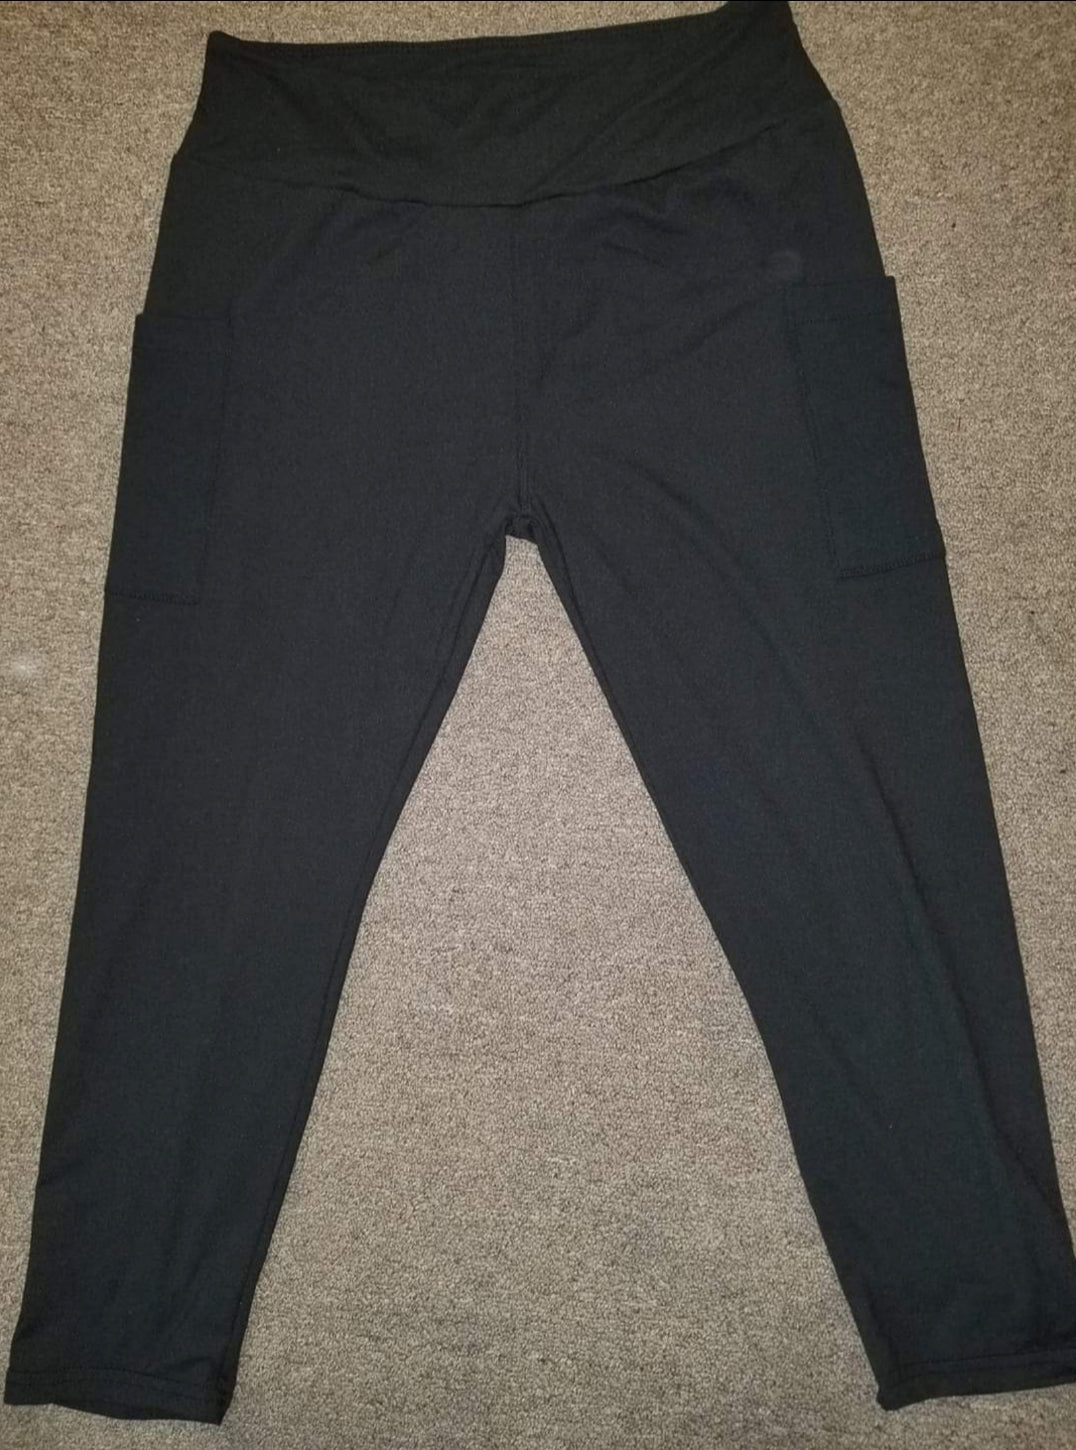 Black Capri leggings with pockets